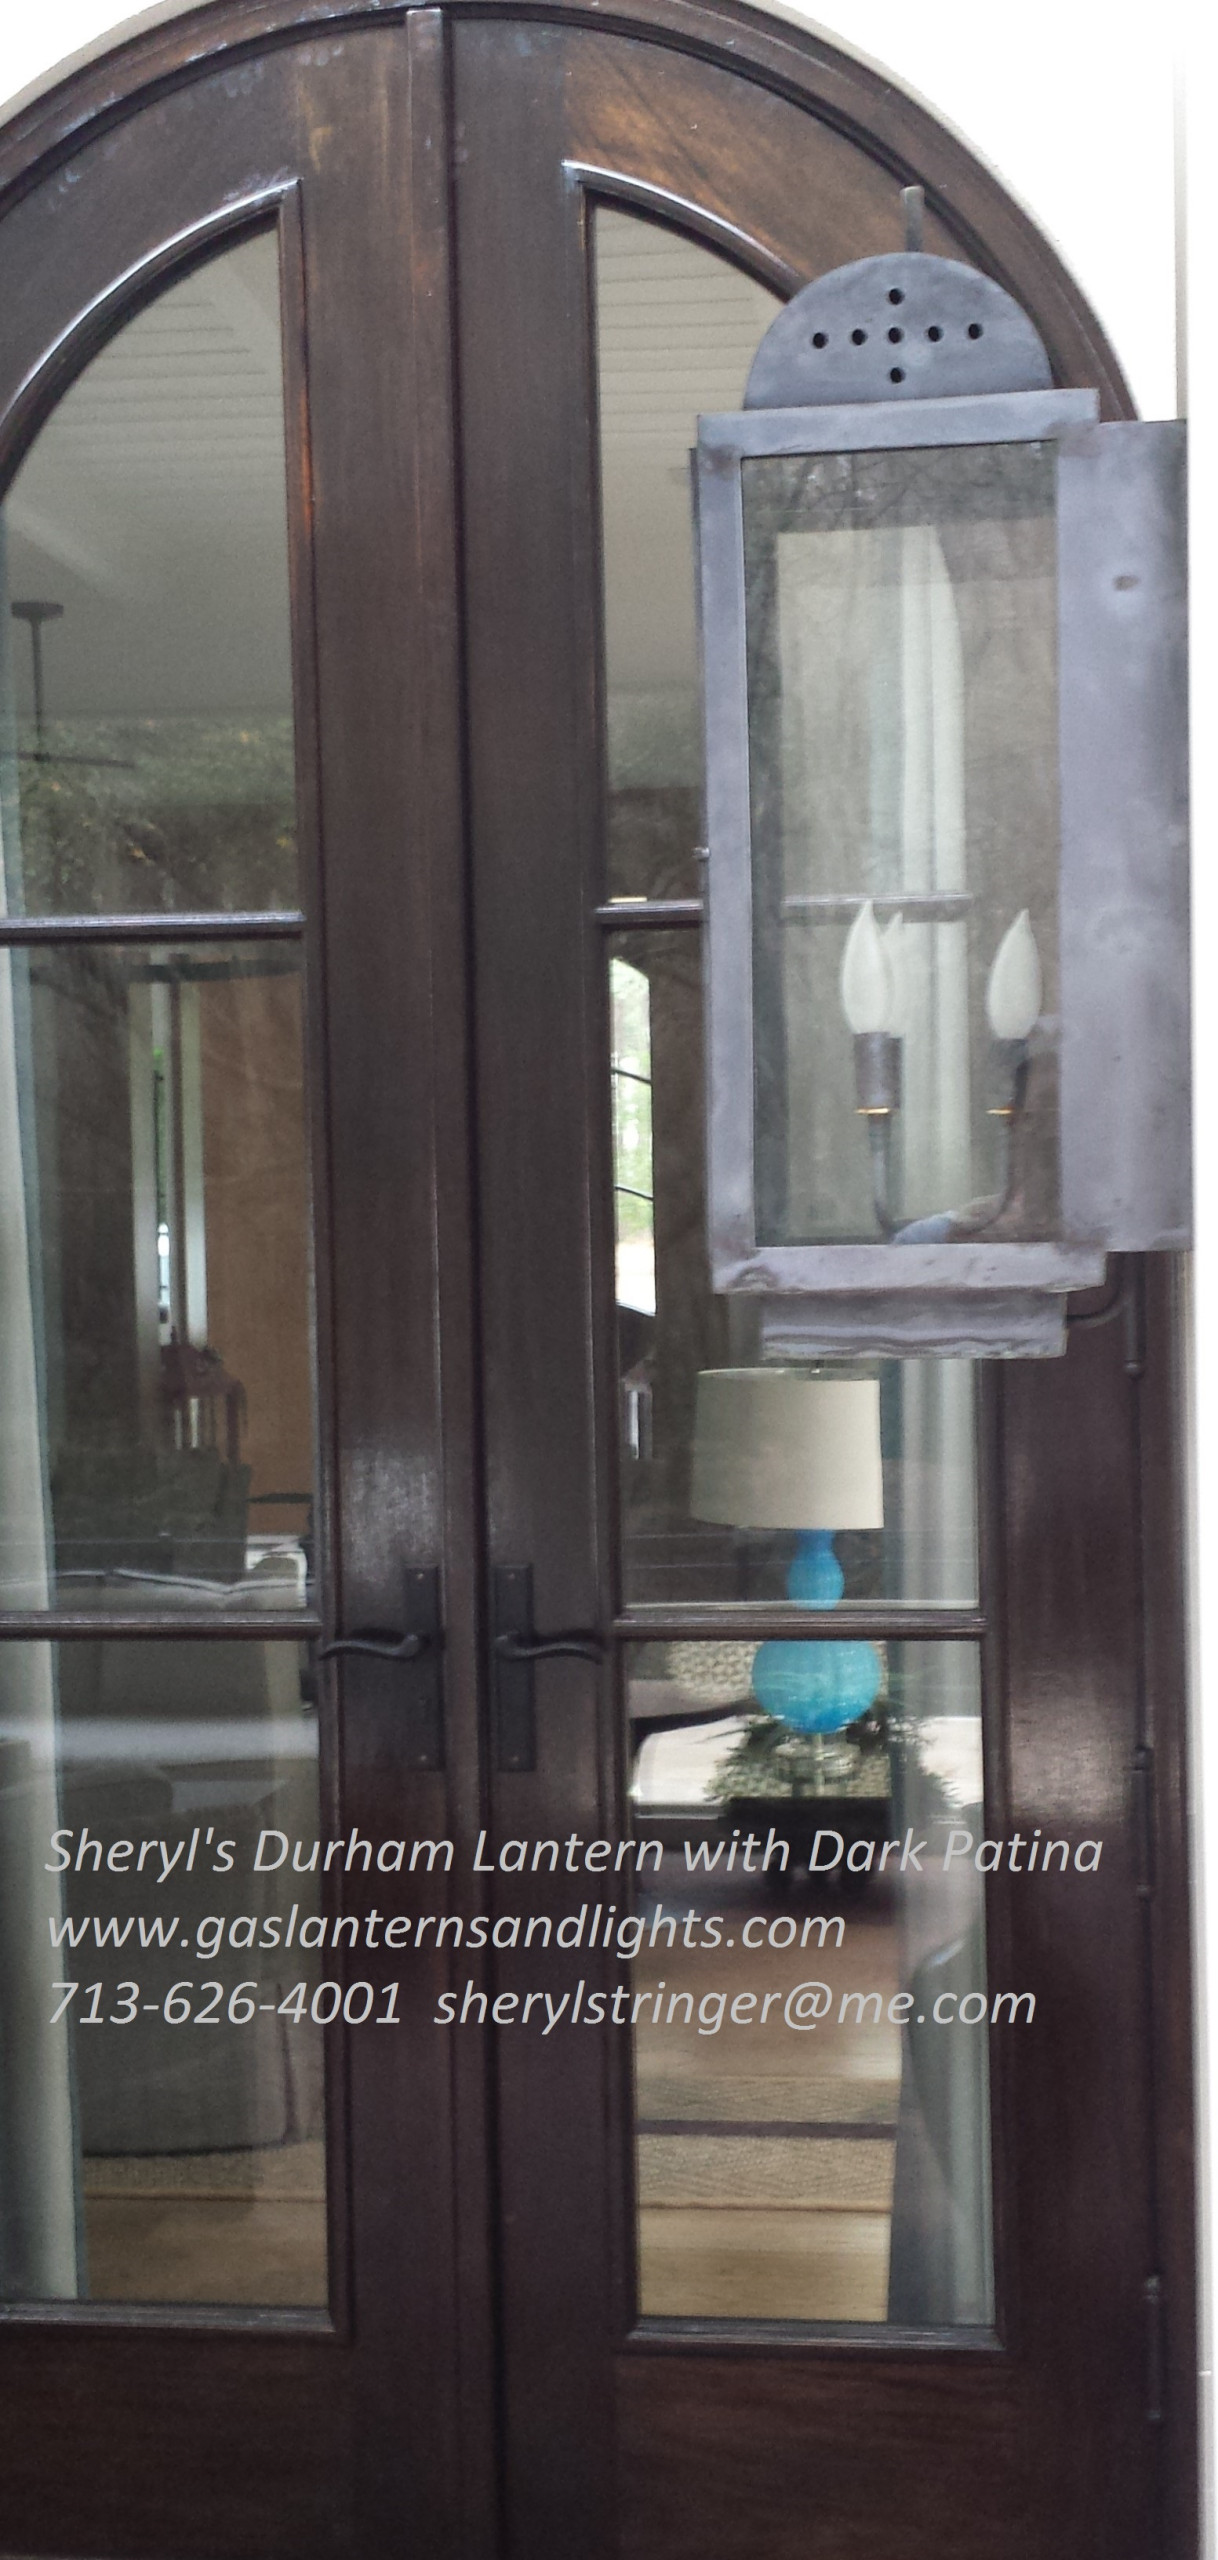 Electric Durham Lantern with Dark Patina Finish  by Sheryl Stringer